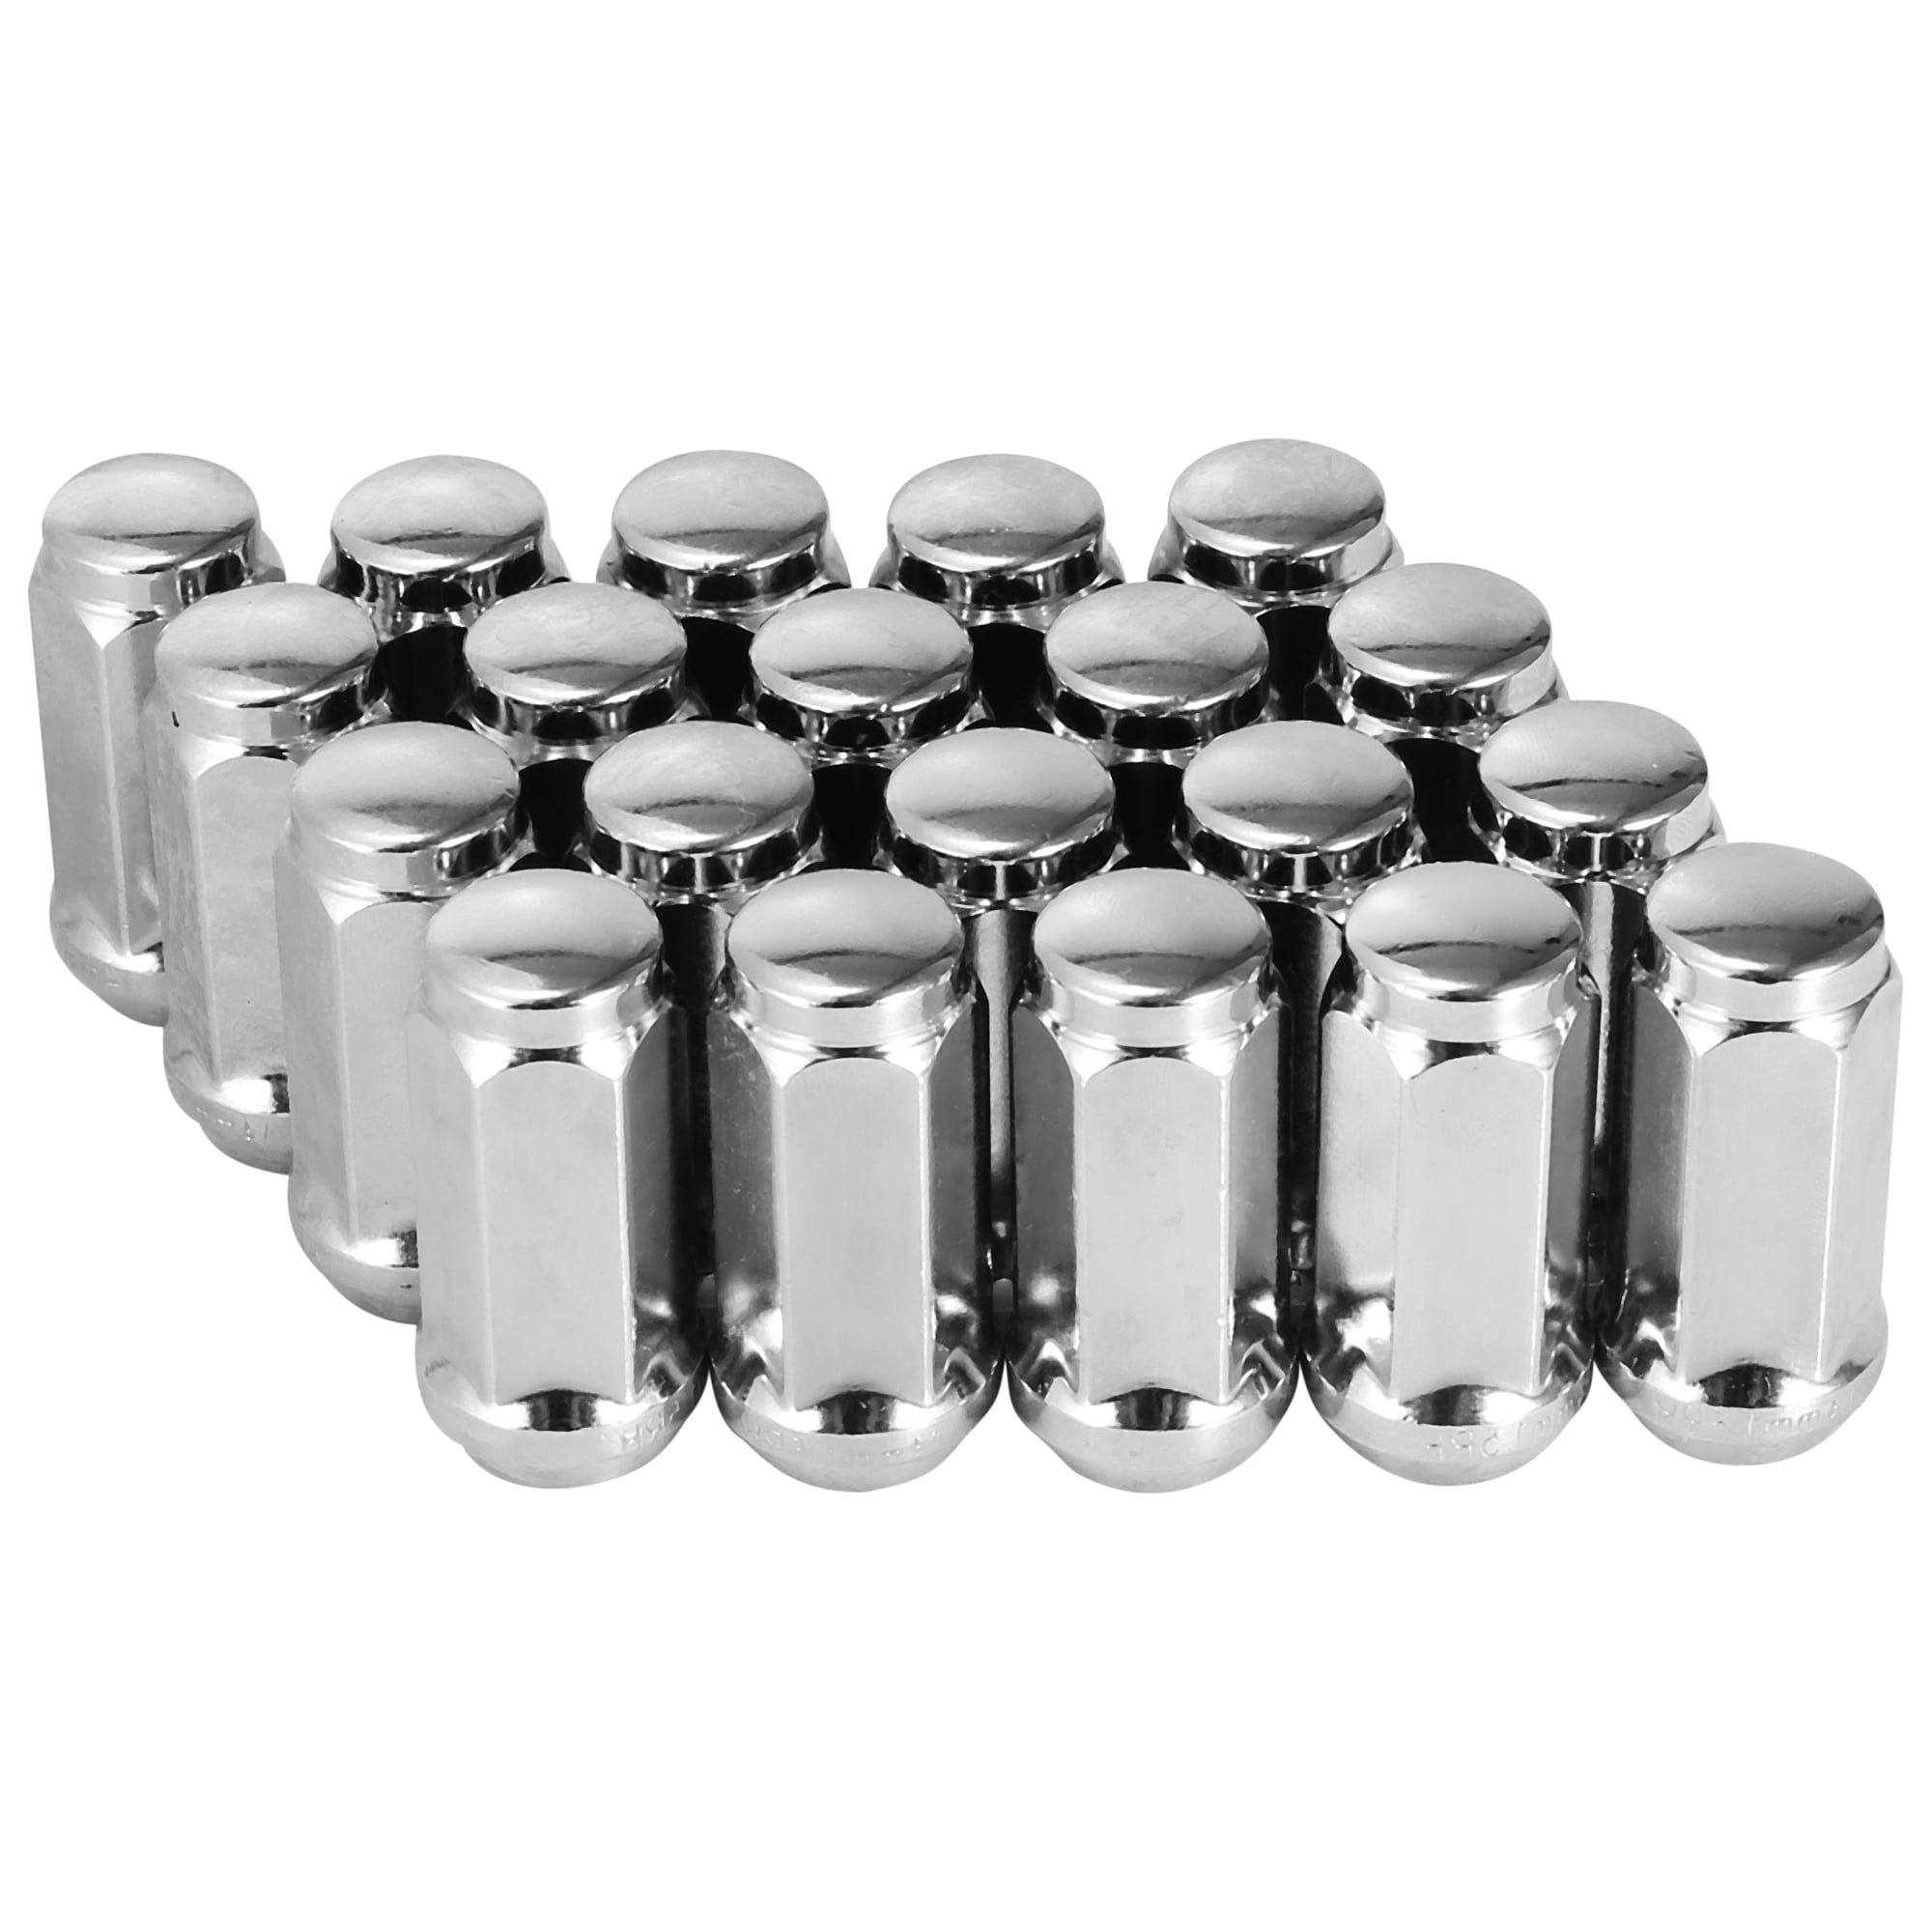 20pcs Silver Tone M14x1.5 Vehicle CNC Lug Nuts Spline Drive Lug Nuts 1.9  Inch Length 19mm Hex Size